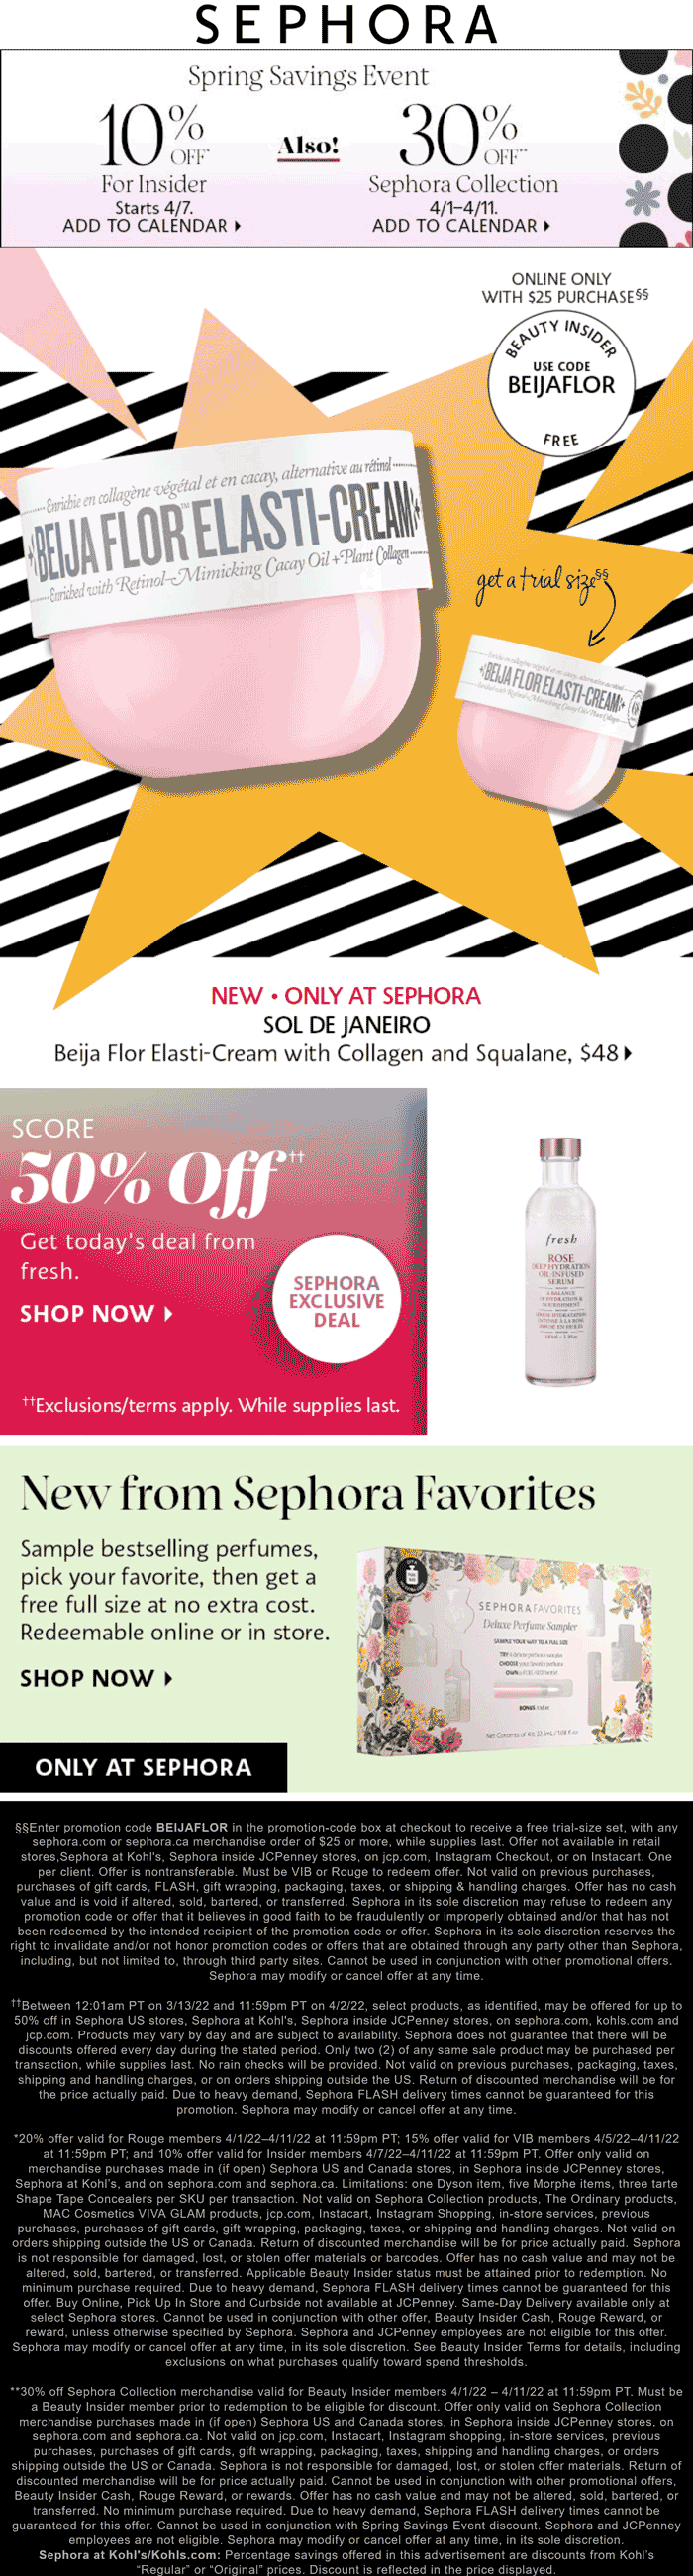 Sephora restaurants Coupon  Try a fragrance & get a free full size + free elasta cream on $25 at Sephora via promo code BEIJAFLOR #sephora 